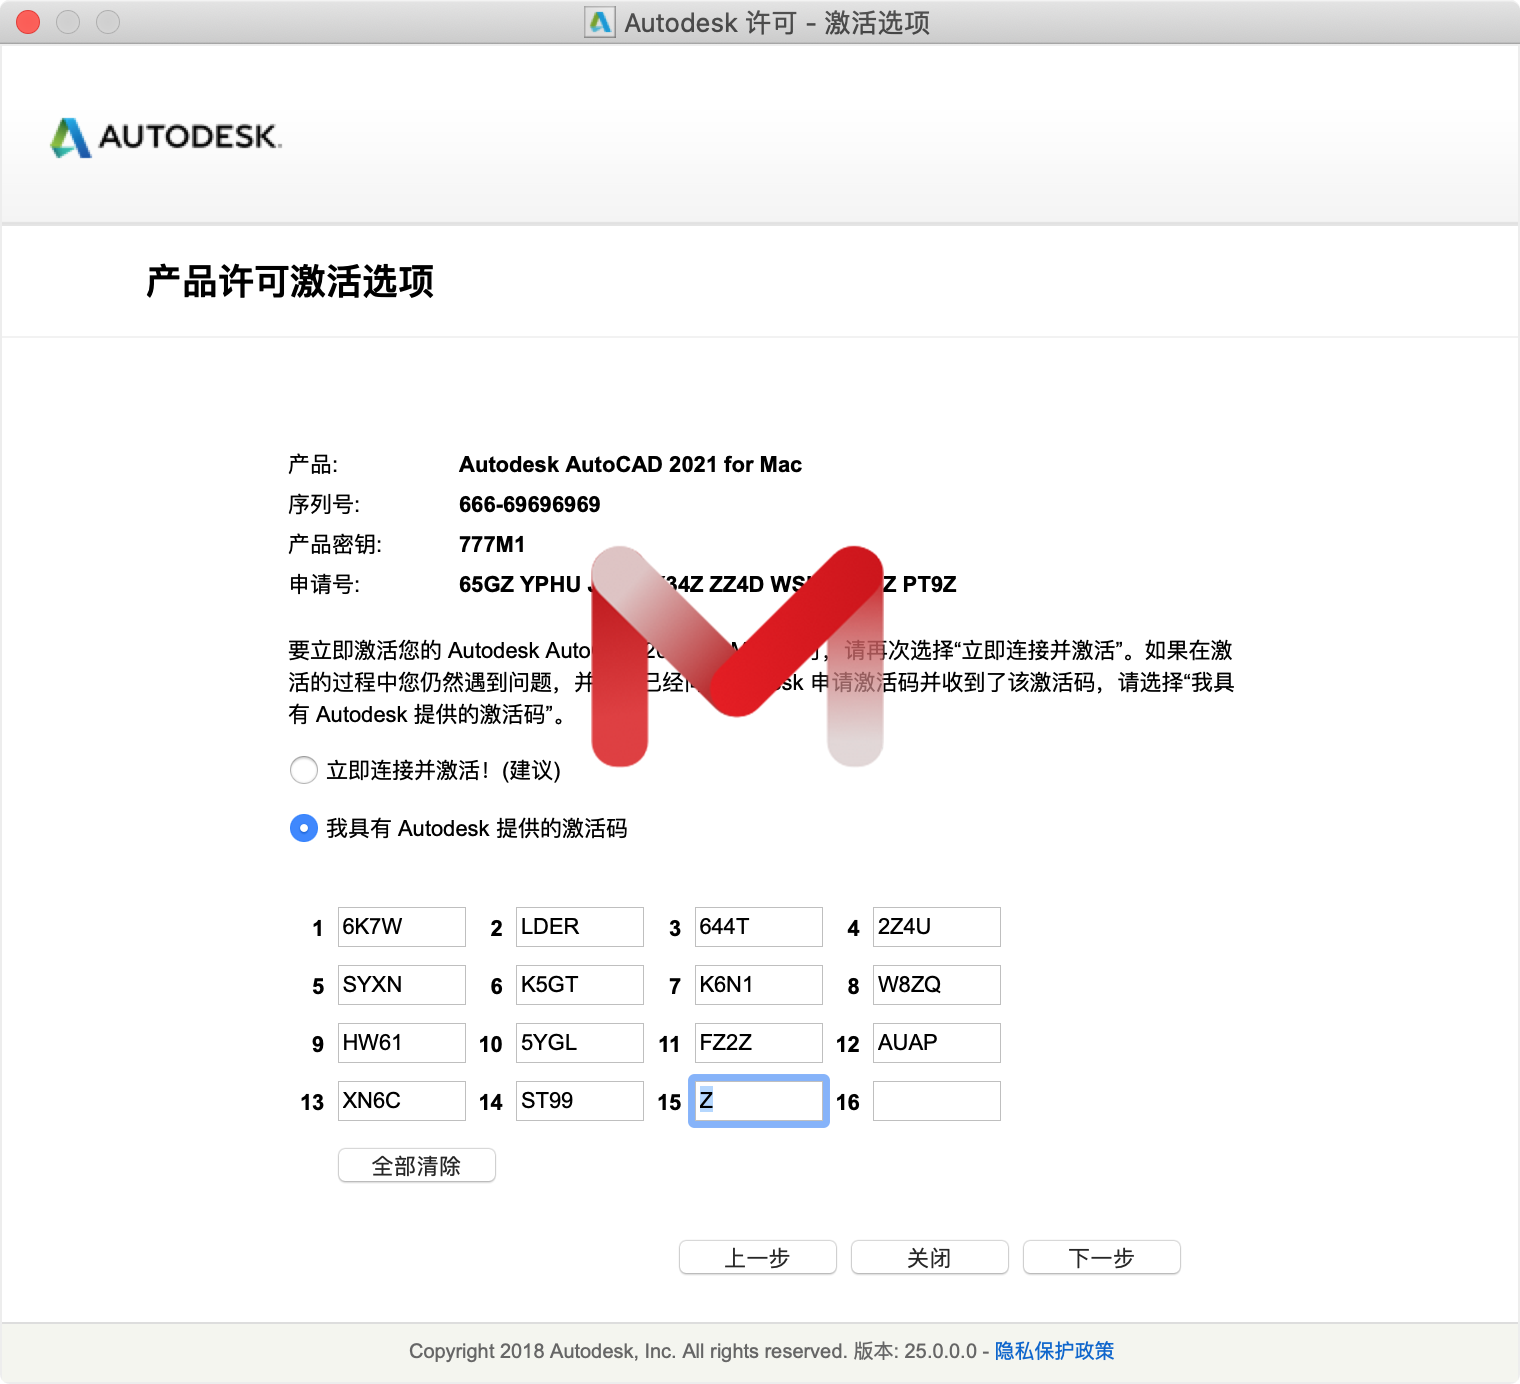 Autodesk AutoCAD 2021.1 For Mac 三维设计软件中文破解版支持M1